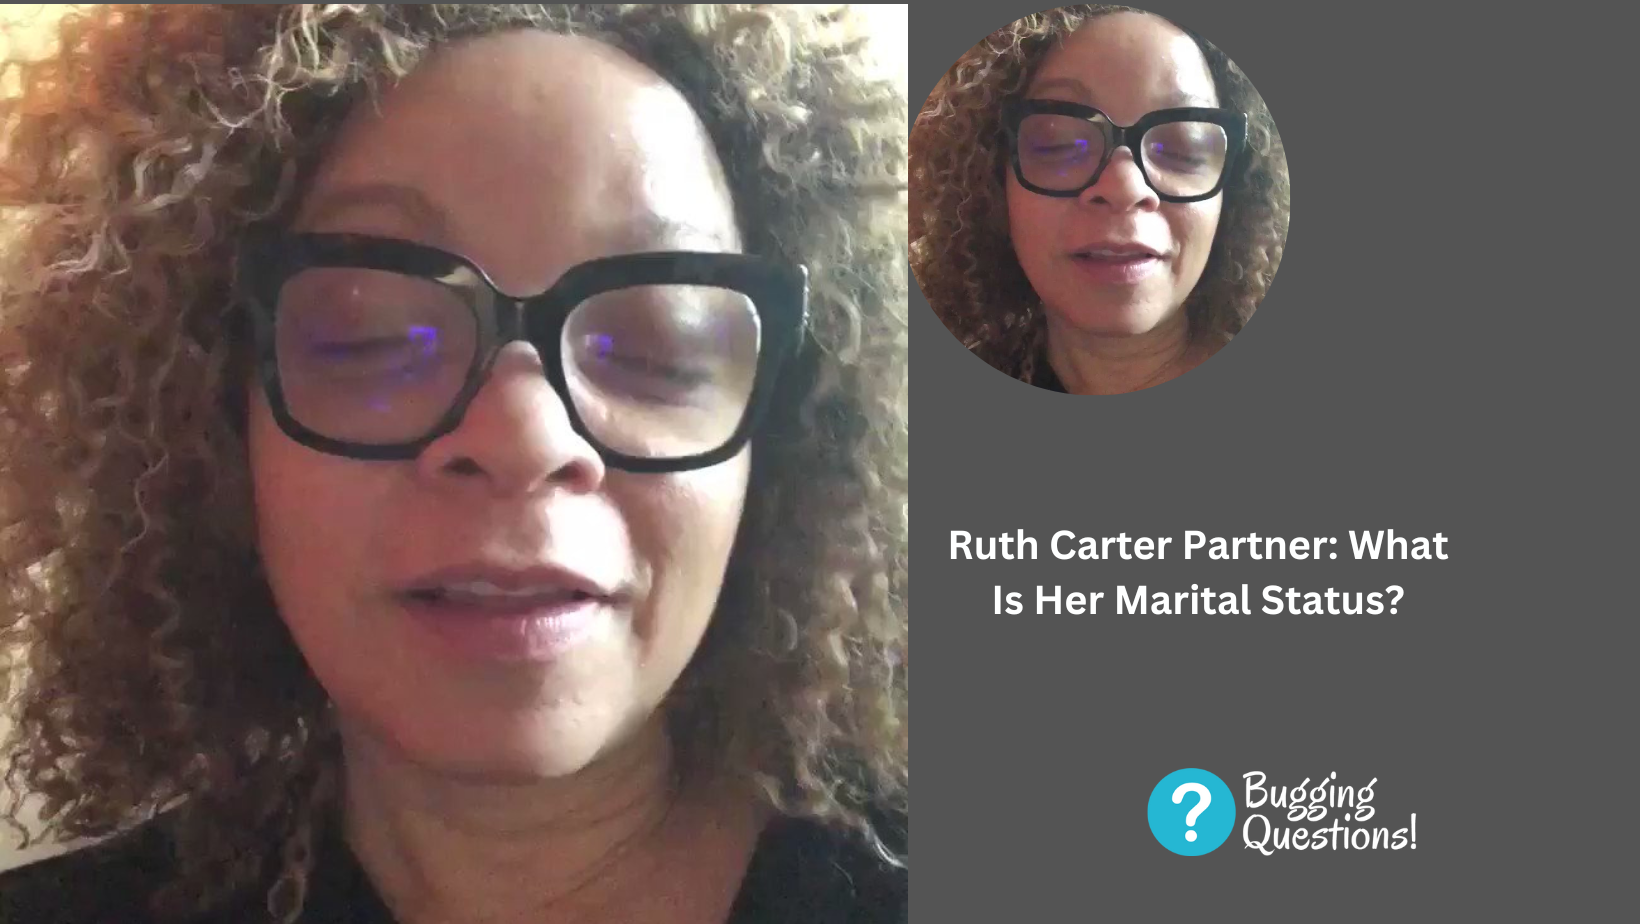 Ruth Carter Partner: What Is Her Marital Status?